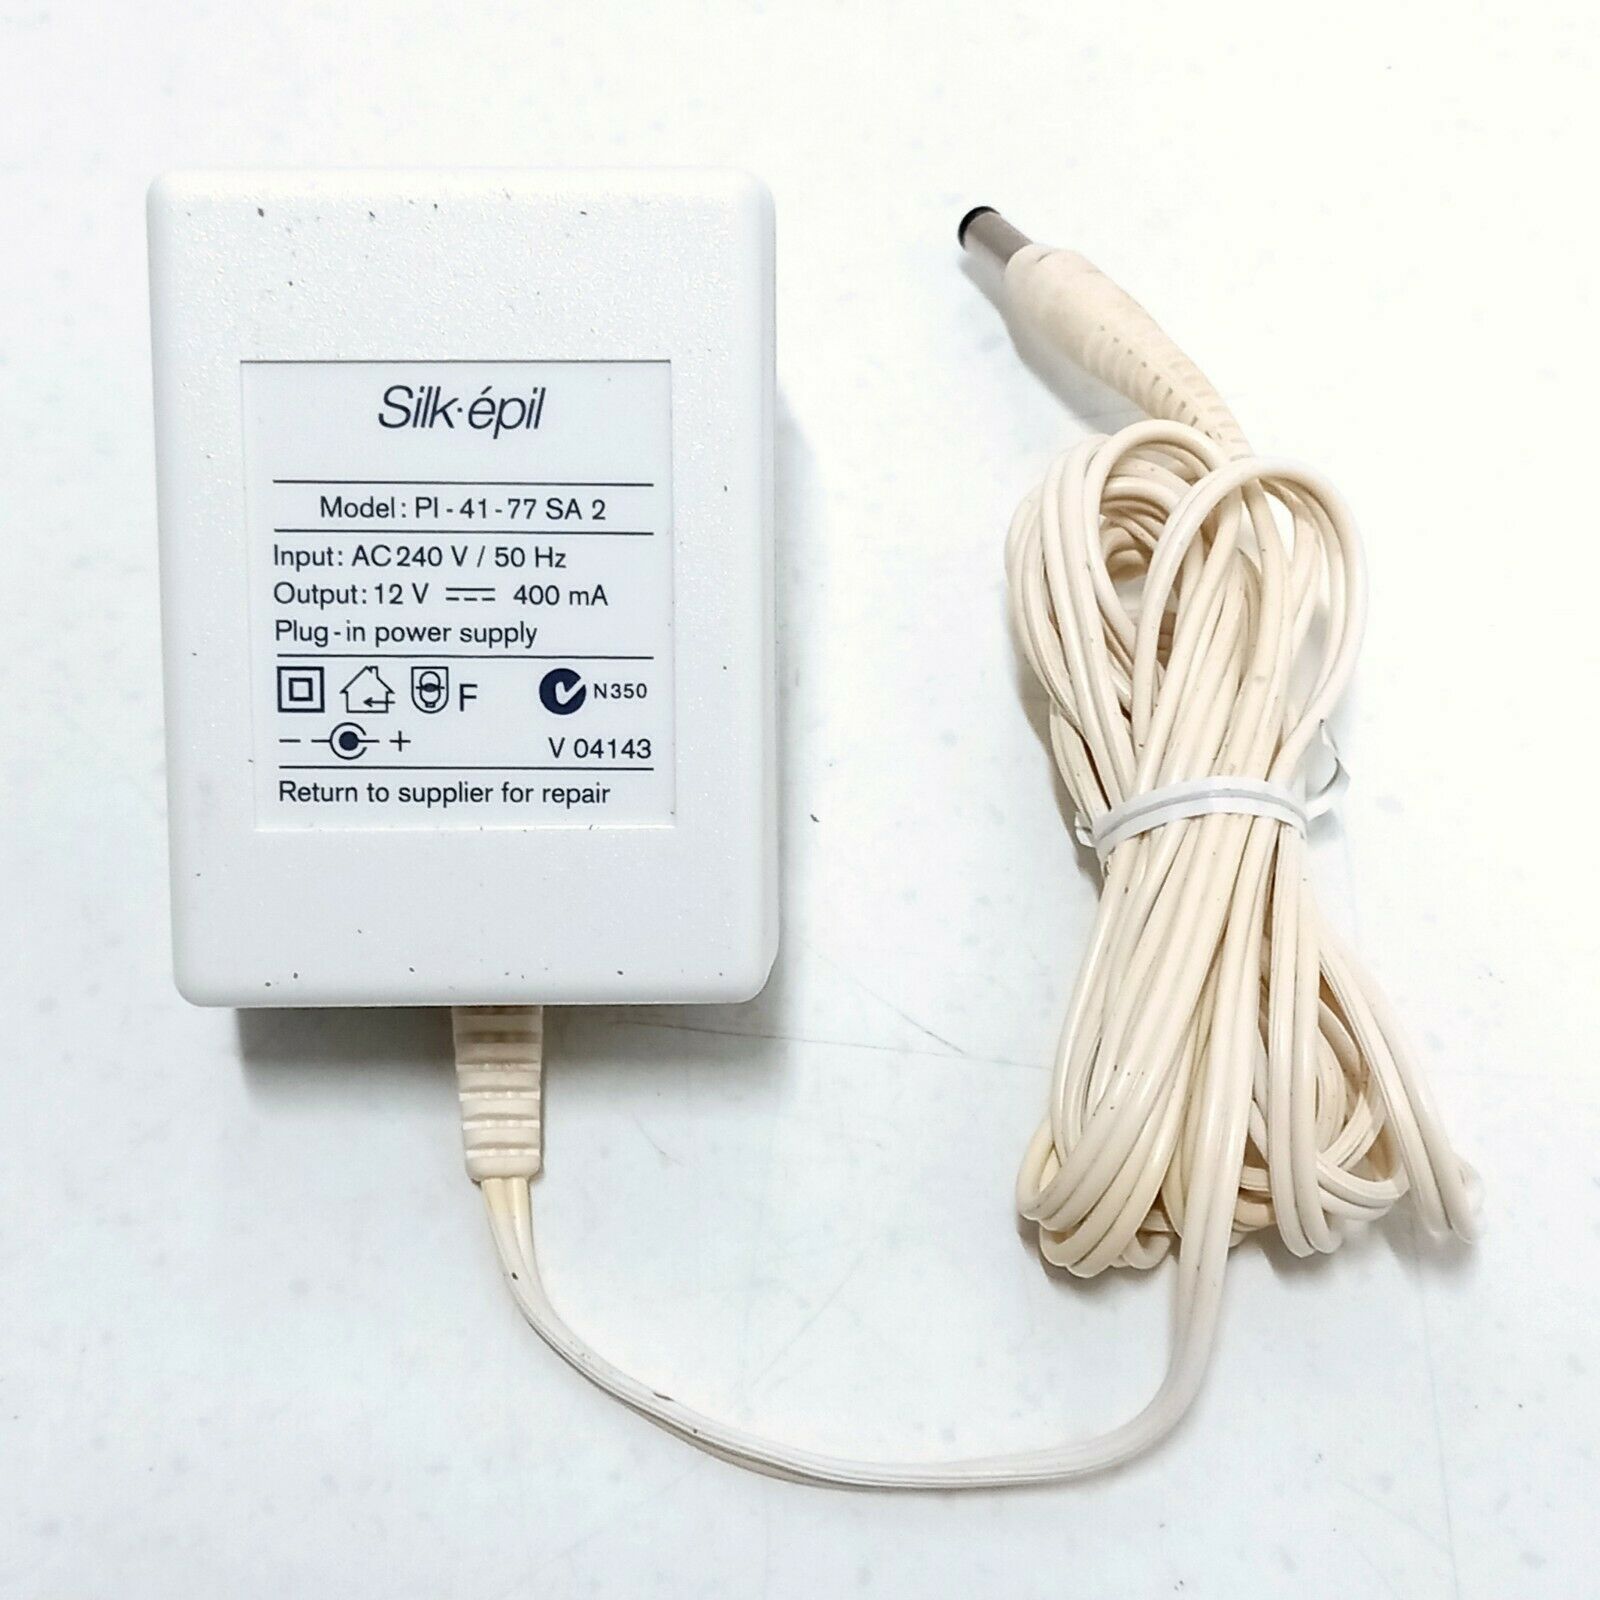 *Brand NEW*Silk epil AC Adapter Pi-41-77SA2 12v Power Supply - Click Image to Close